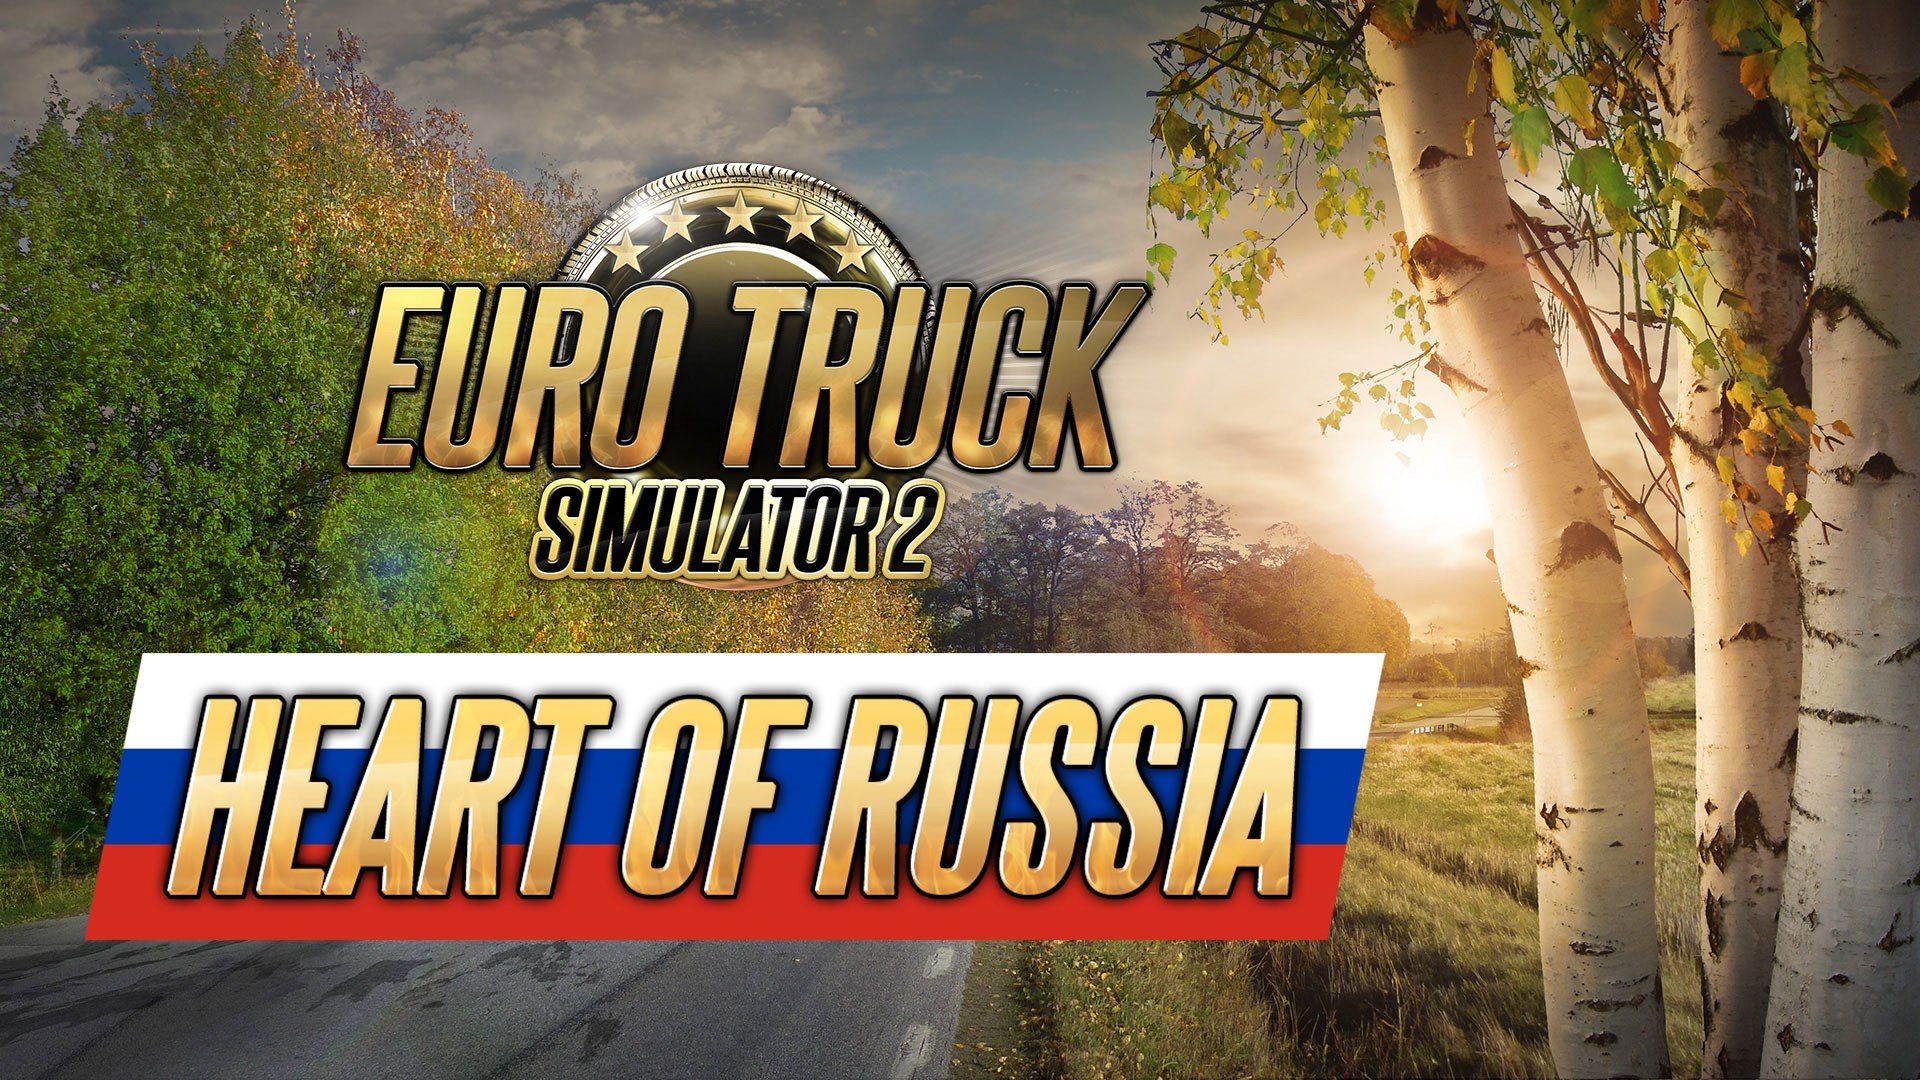 ETS 2'nin Rusya DLC'si 'Heart of Russia' duyuruldu